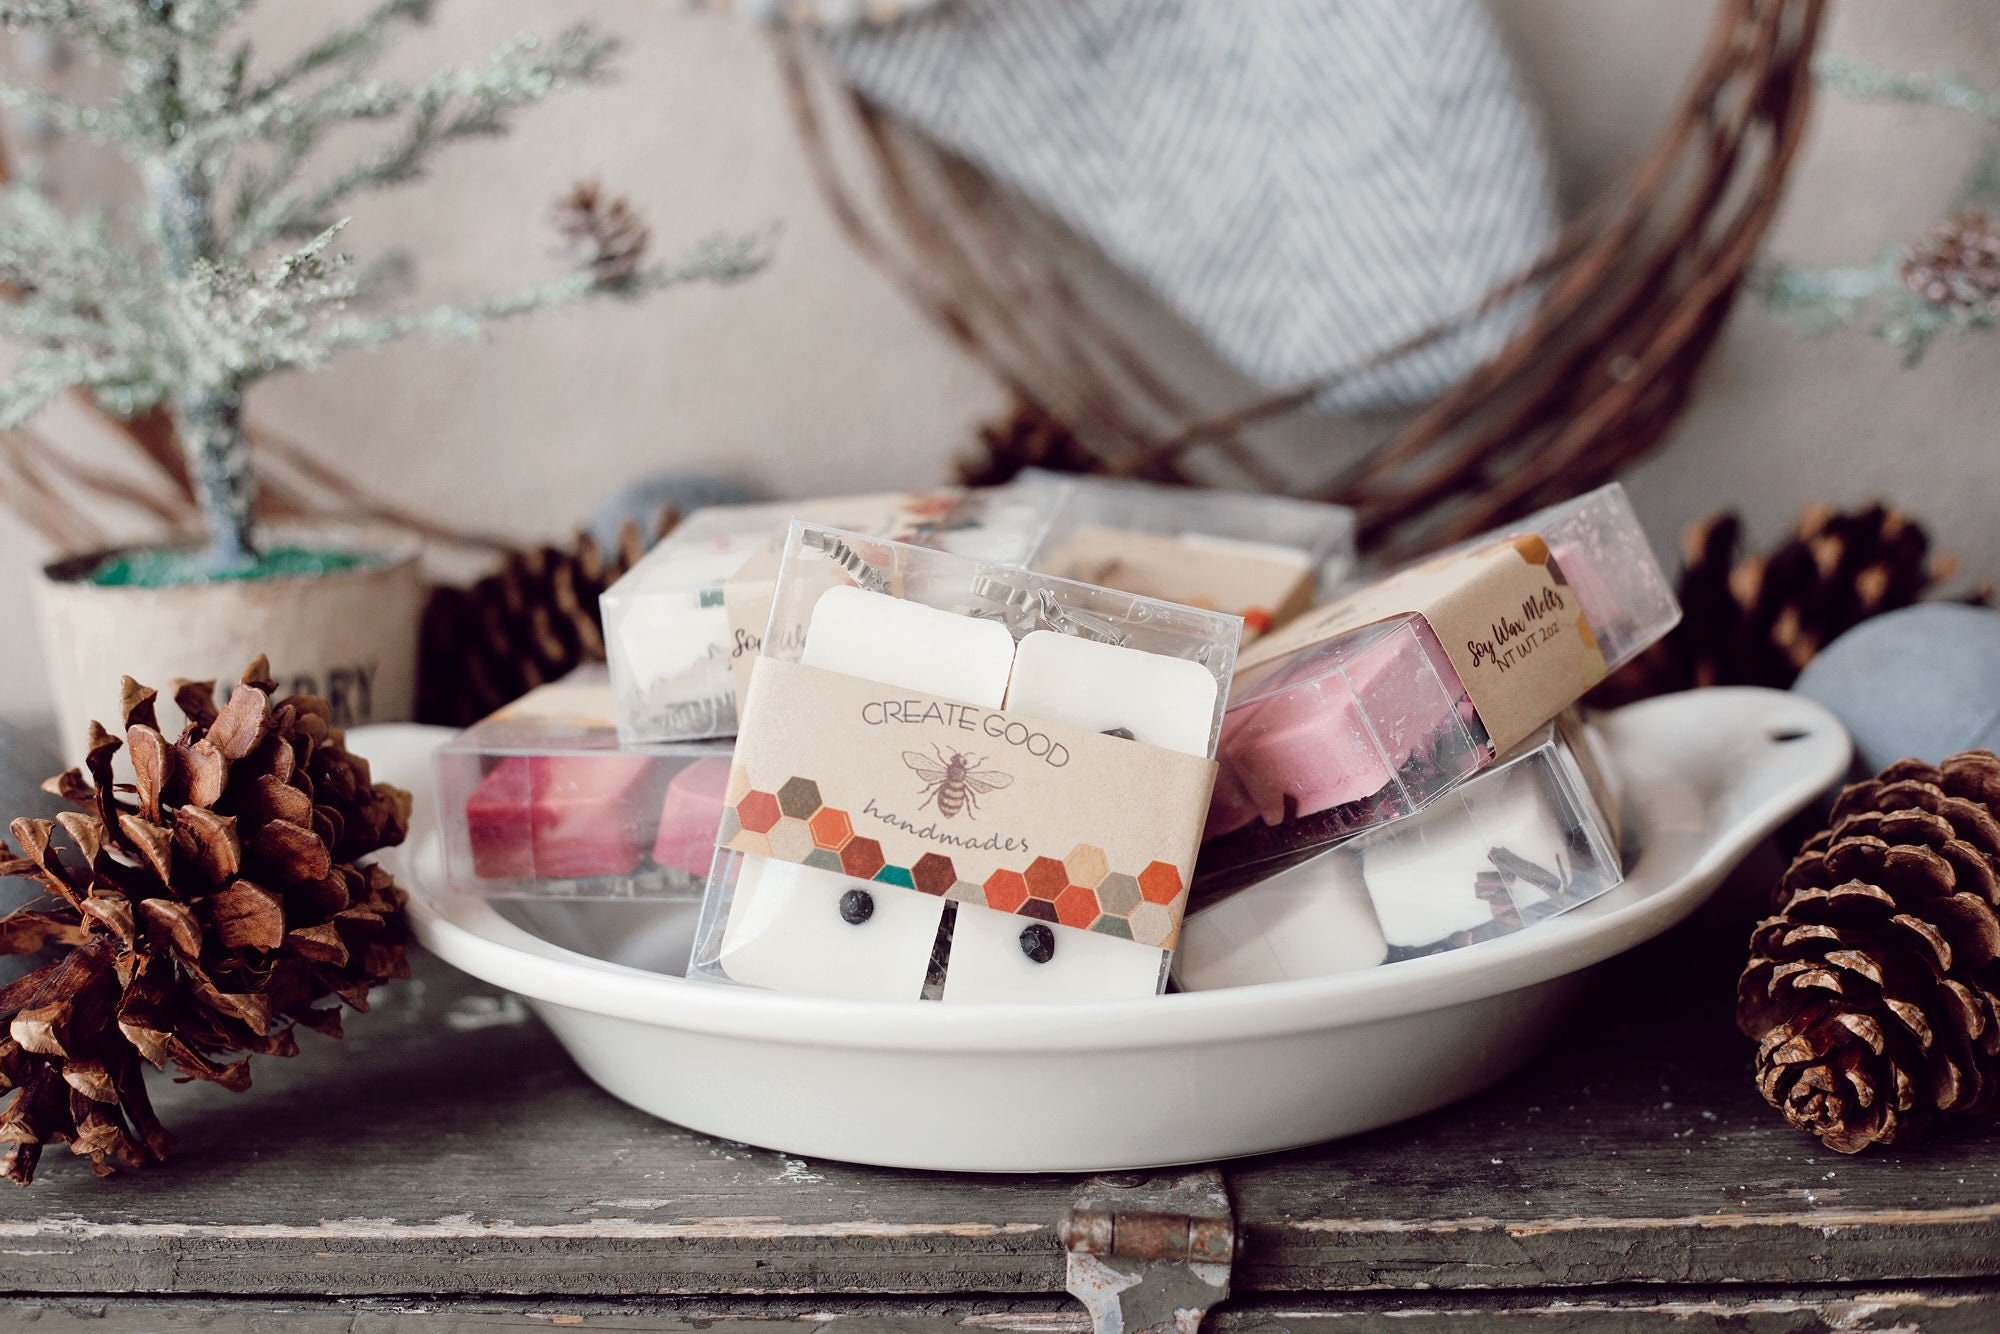 Christmas Spirit Wax Melts Box. A Mix of Holiday Home Fragrances